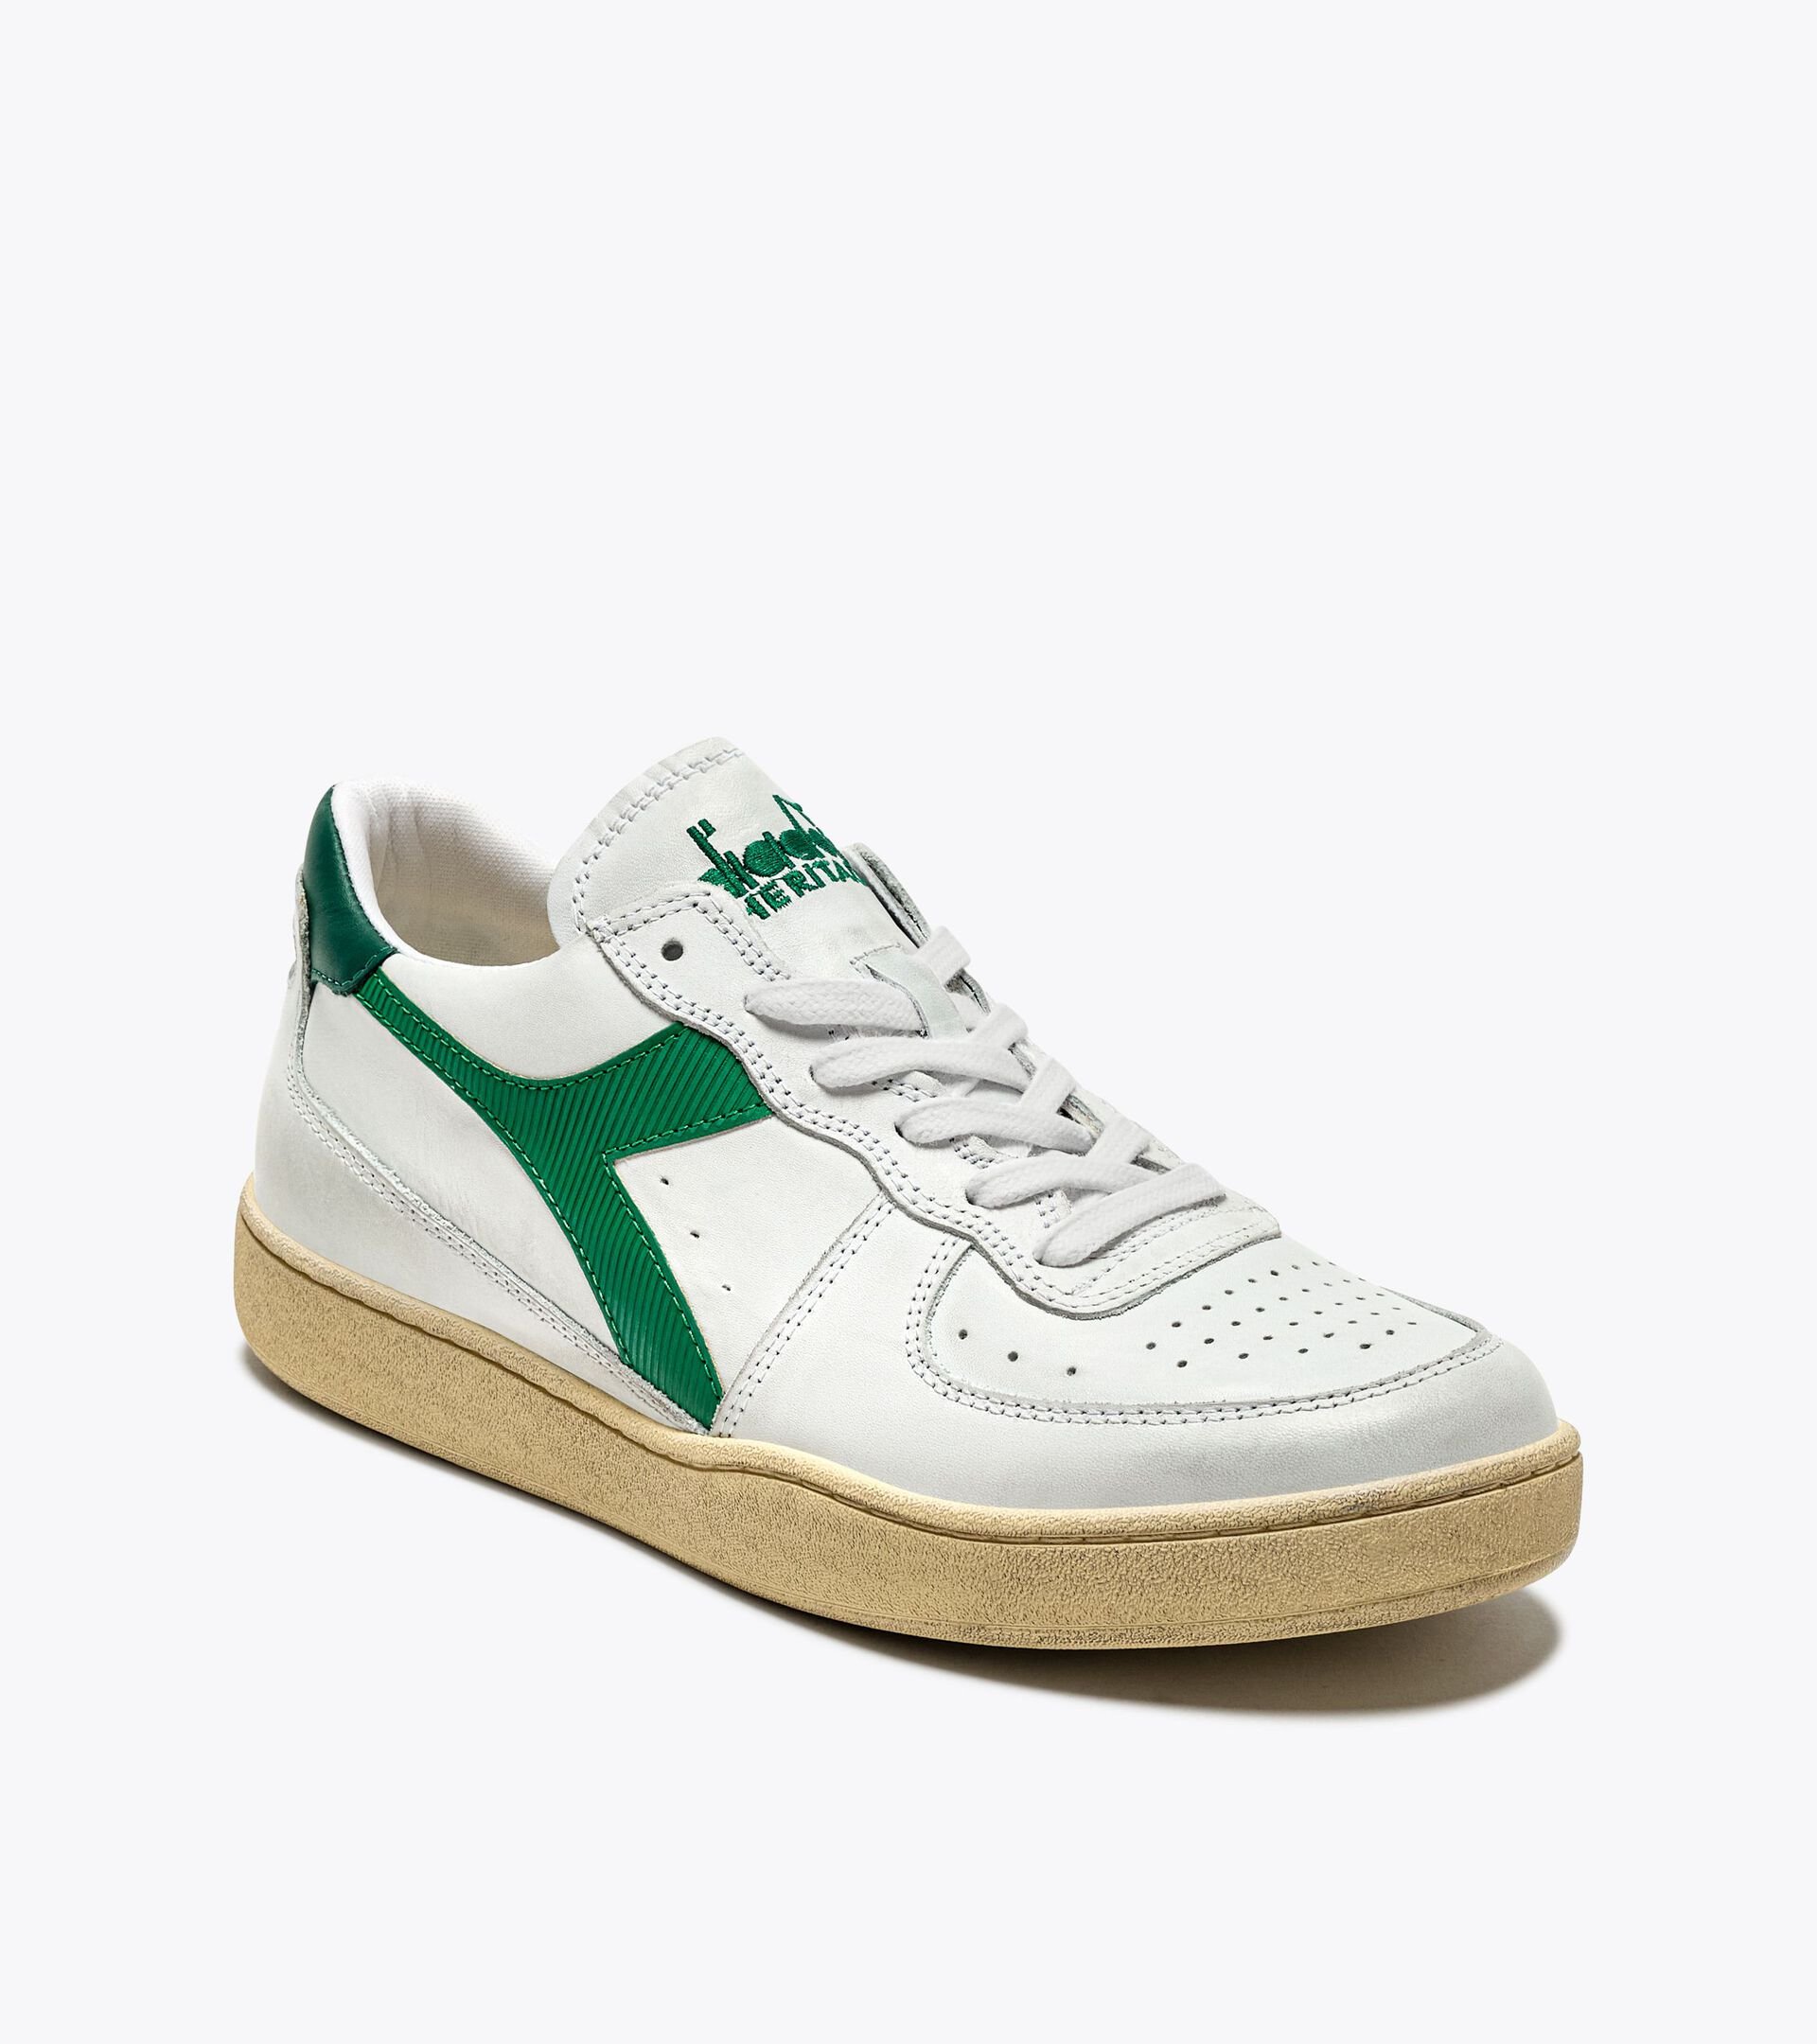 Heritage shoe - Gender Neutral MI BASKET LOW USED WHITE/VERDANT GREEN - Diadora